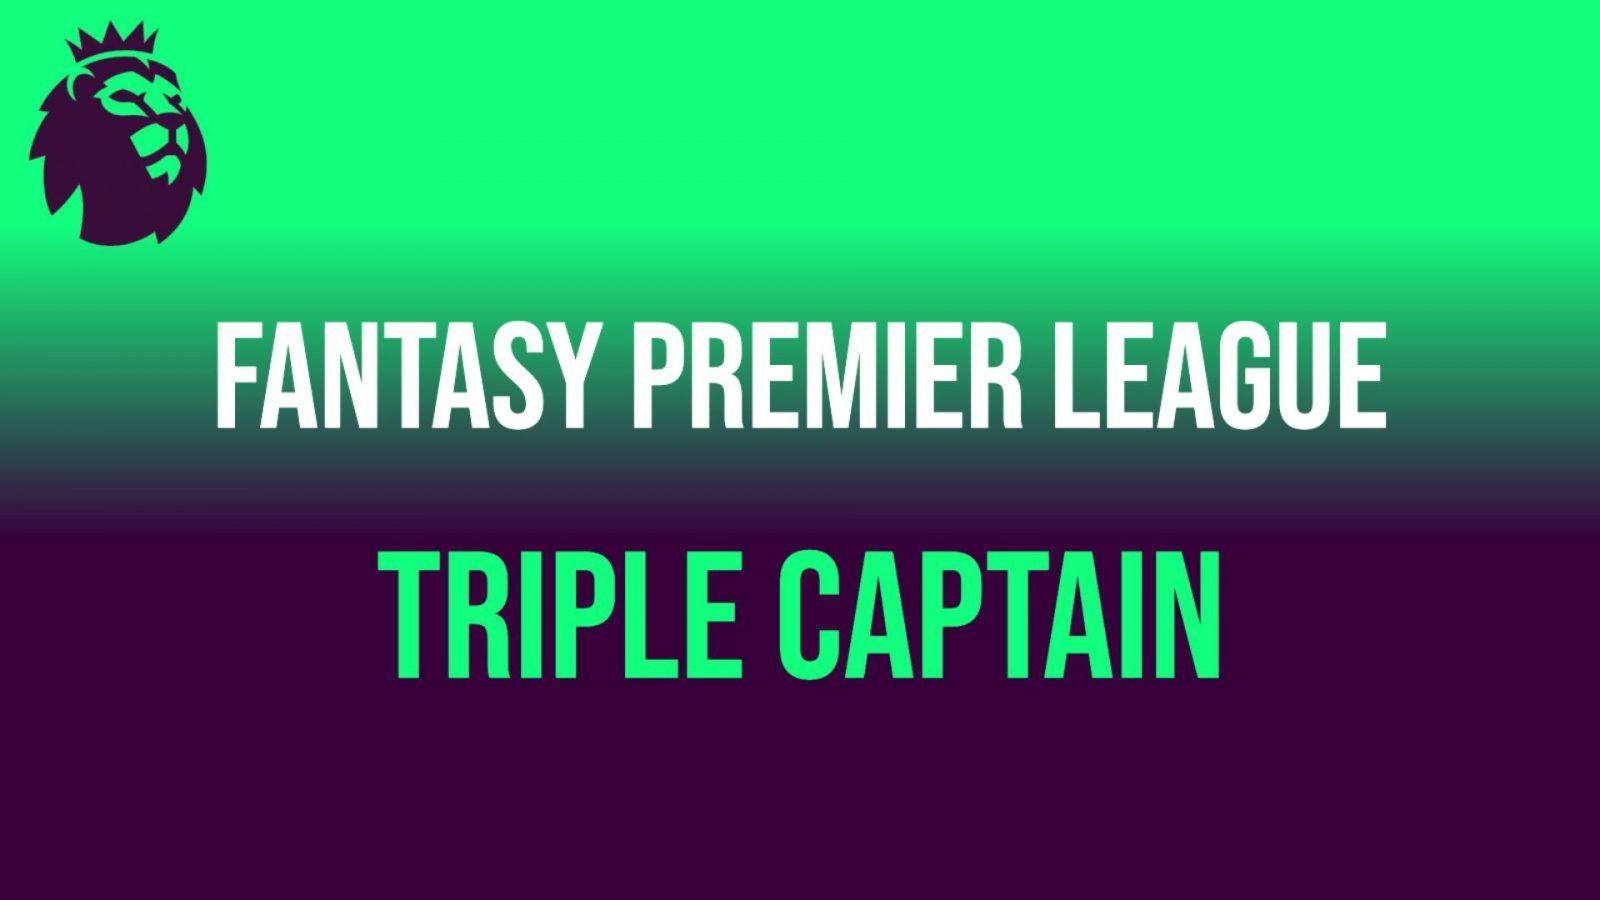 fantasy premier league logo